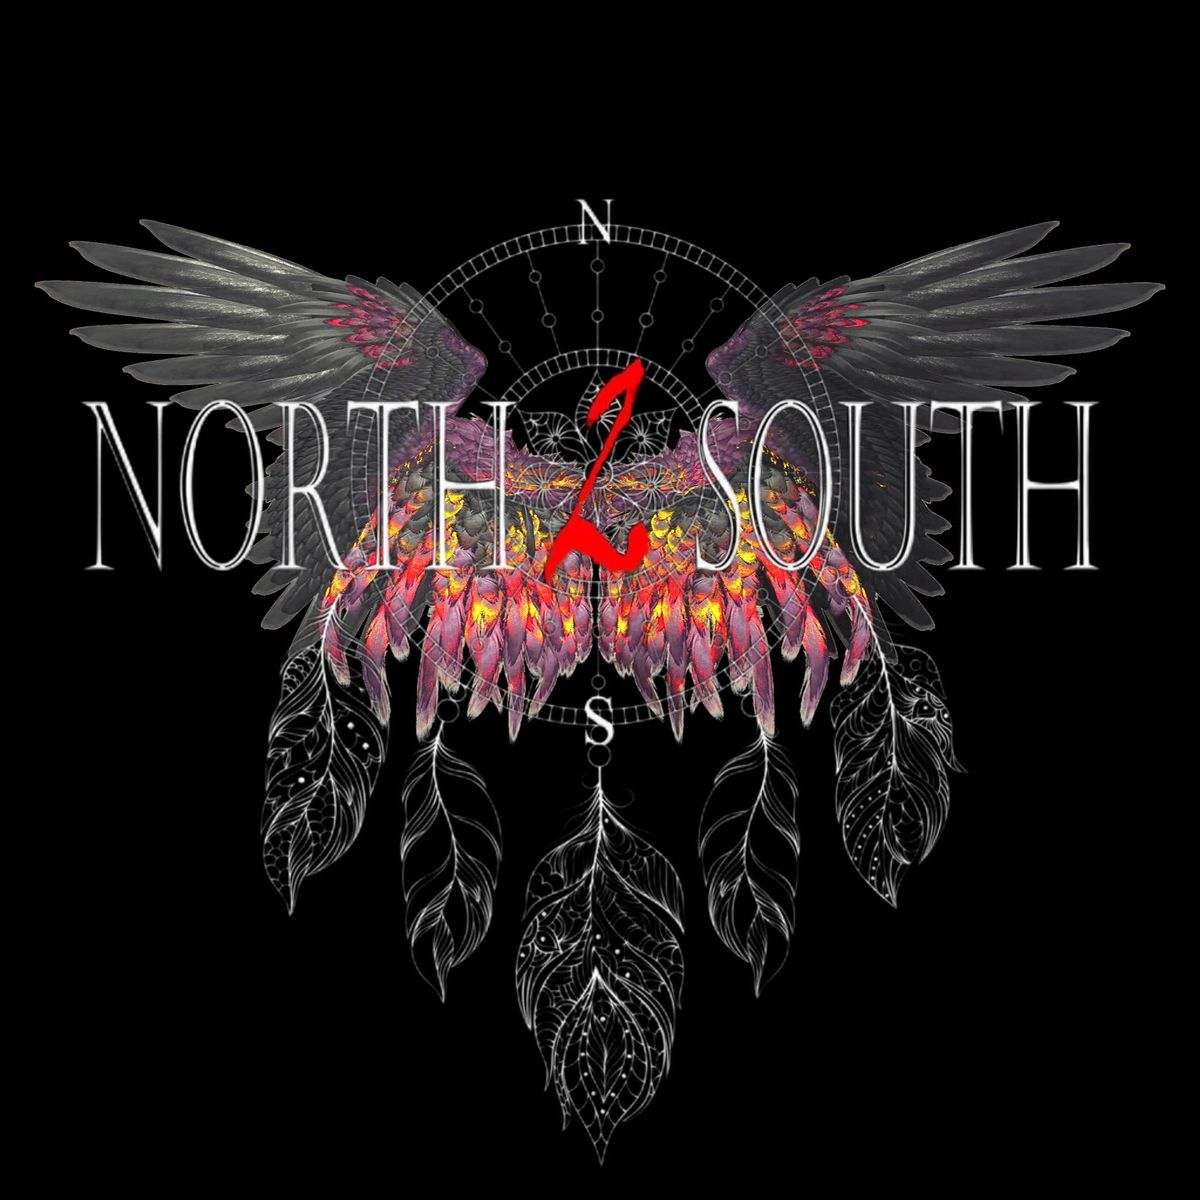 North2South returns to BOM